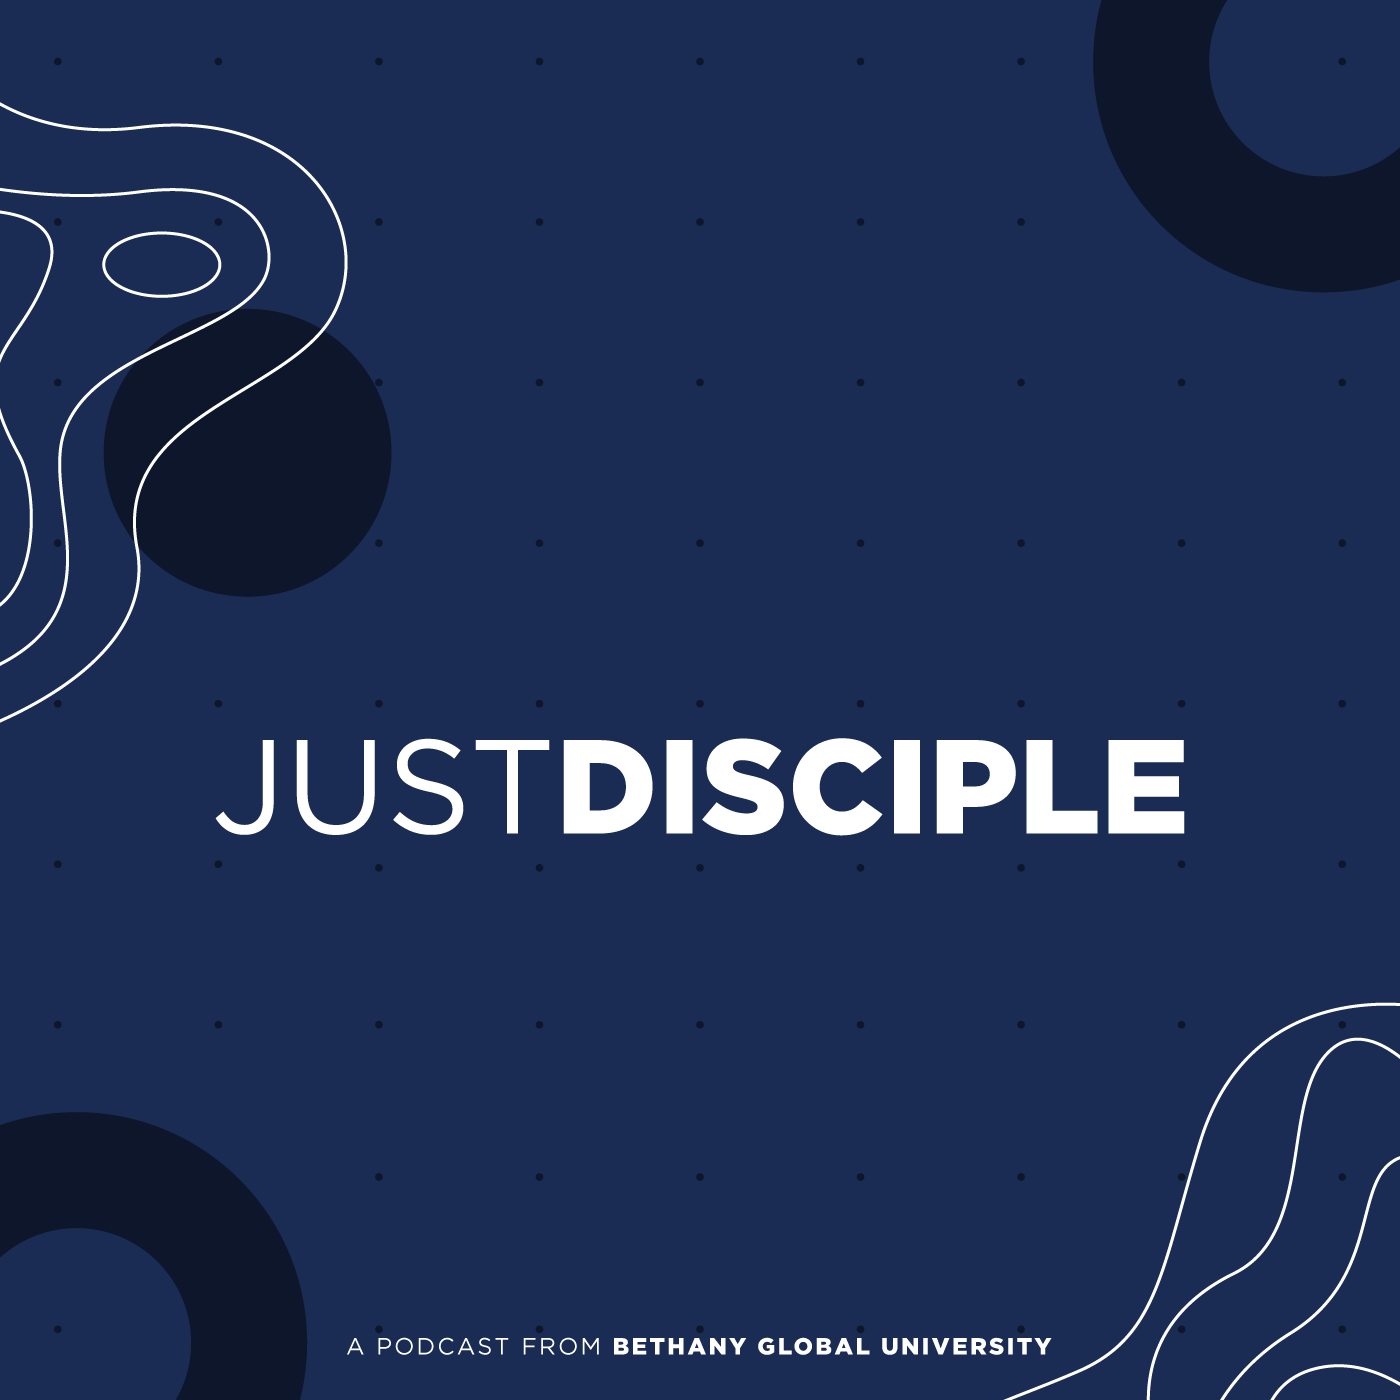 Just Disciple